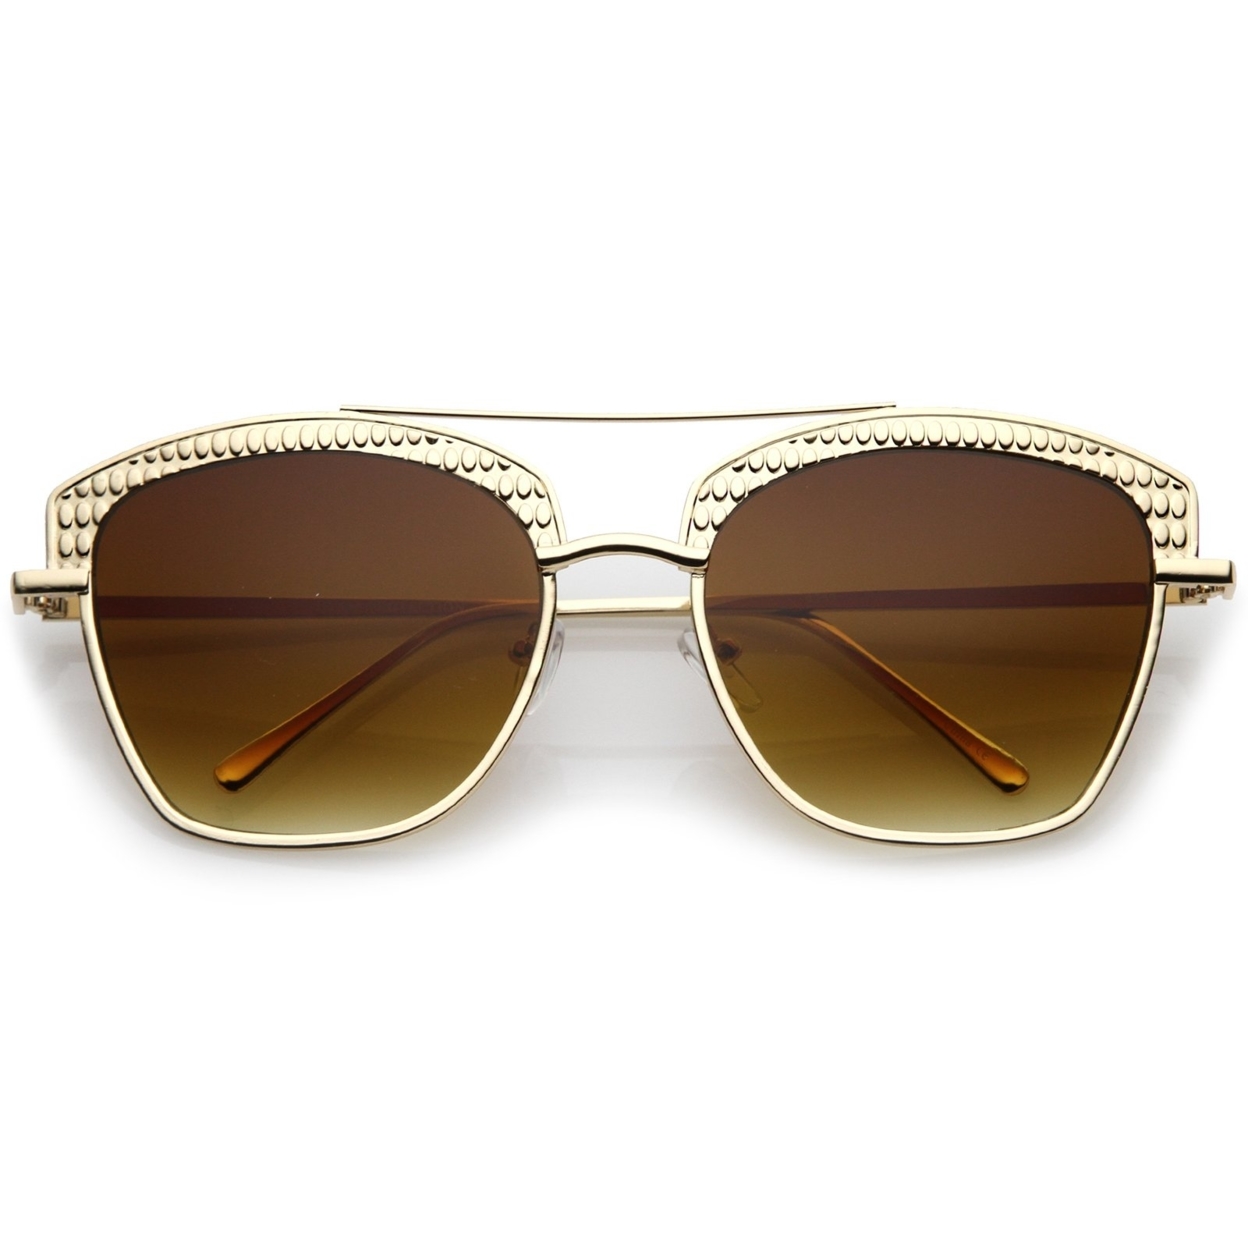 Women's Crossbar Slim Arms Textured Metal Flat Lens Square Sunglasses 58mm - Gold / Smoke